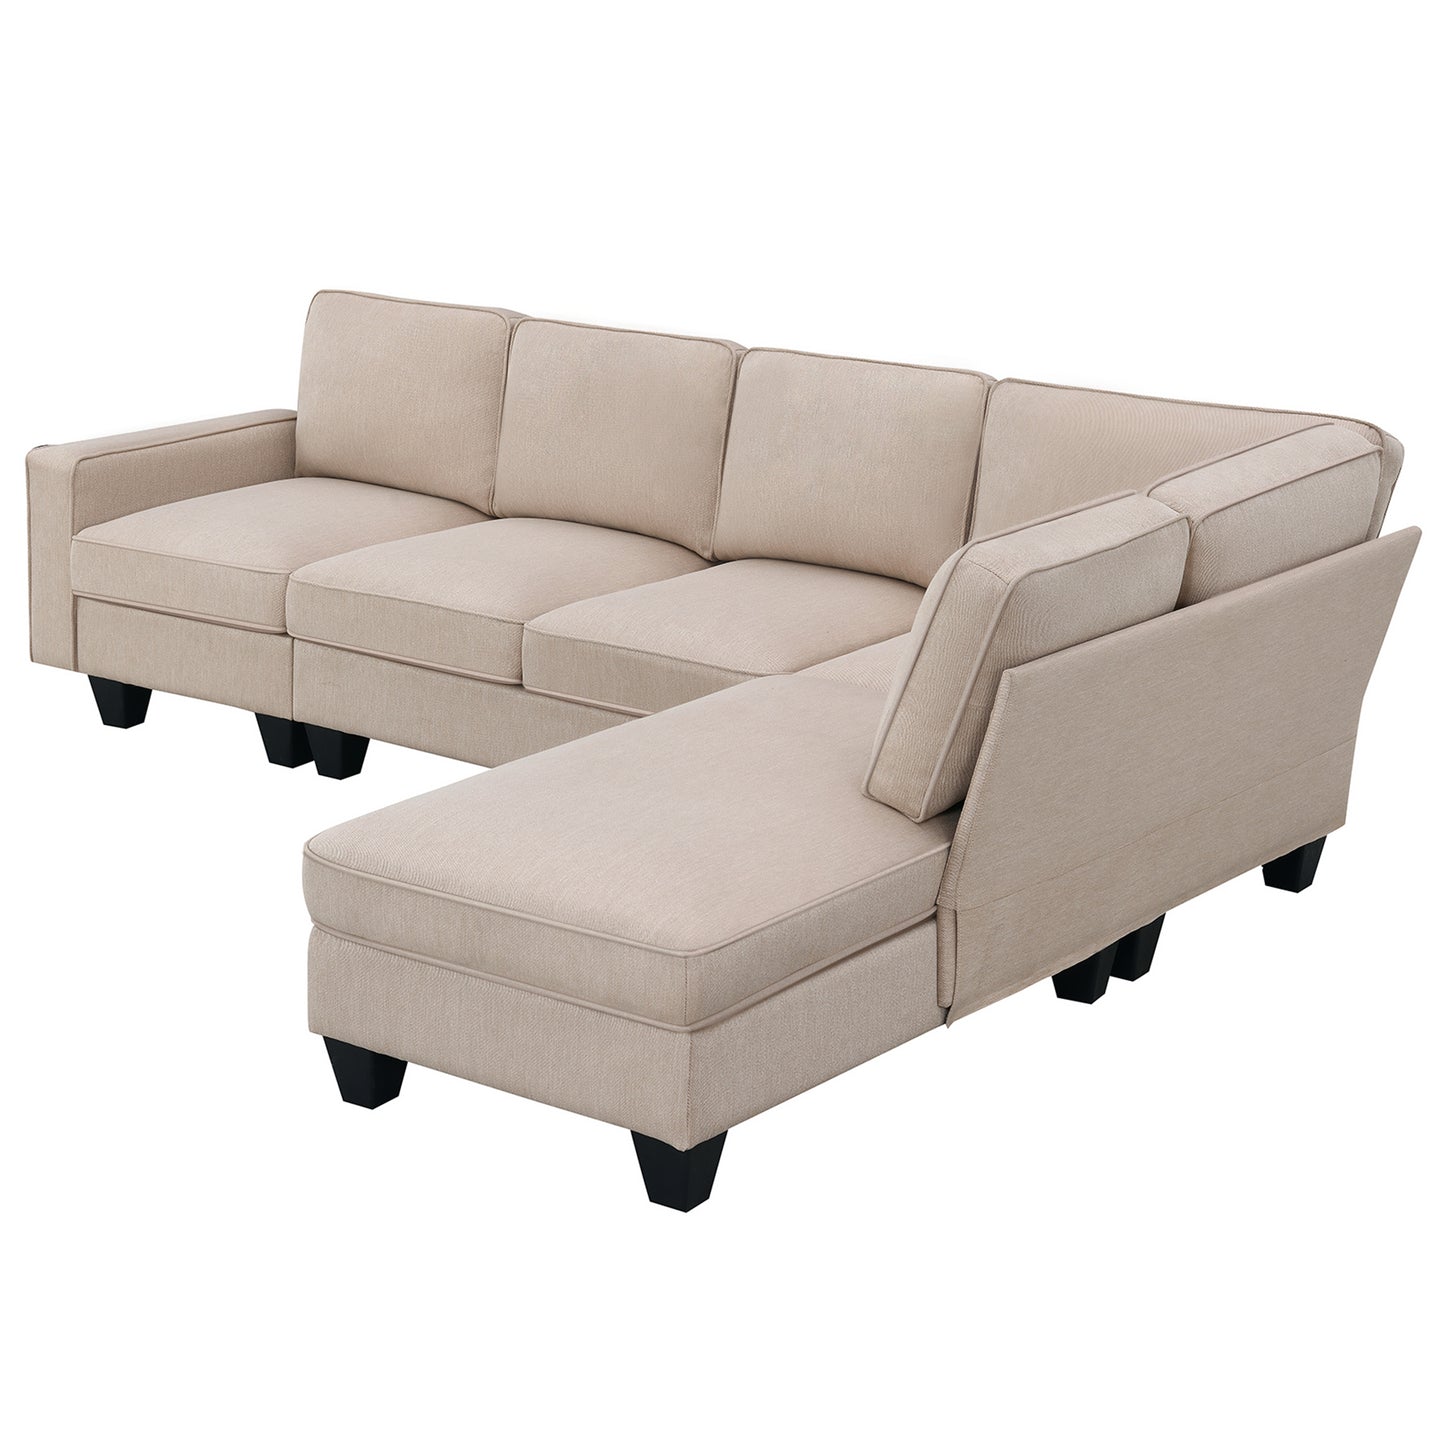 Presto L-shaped Sectional Sofa - khaki